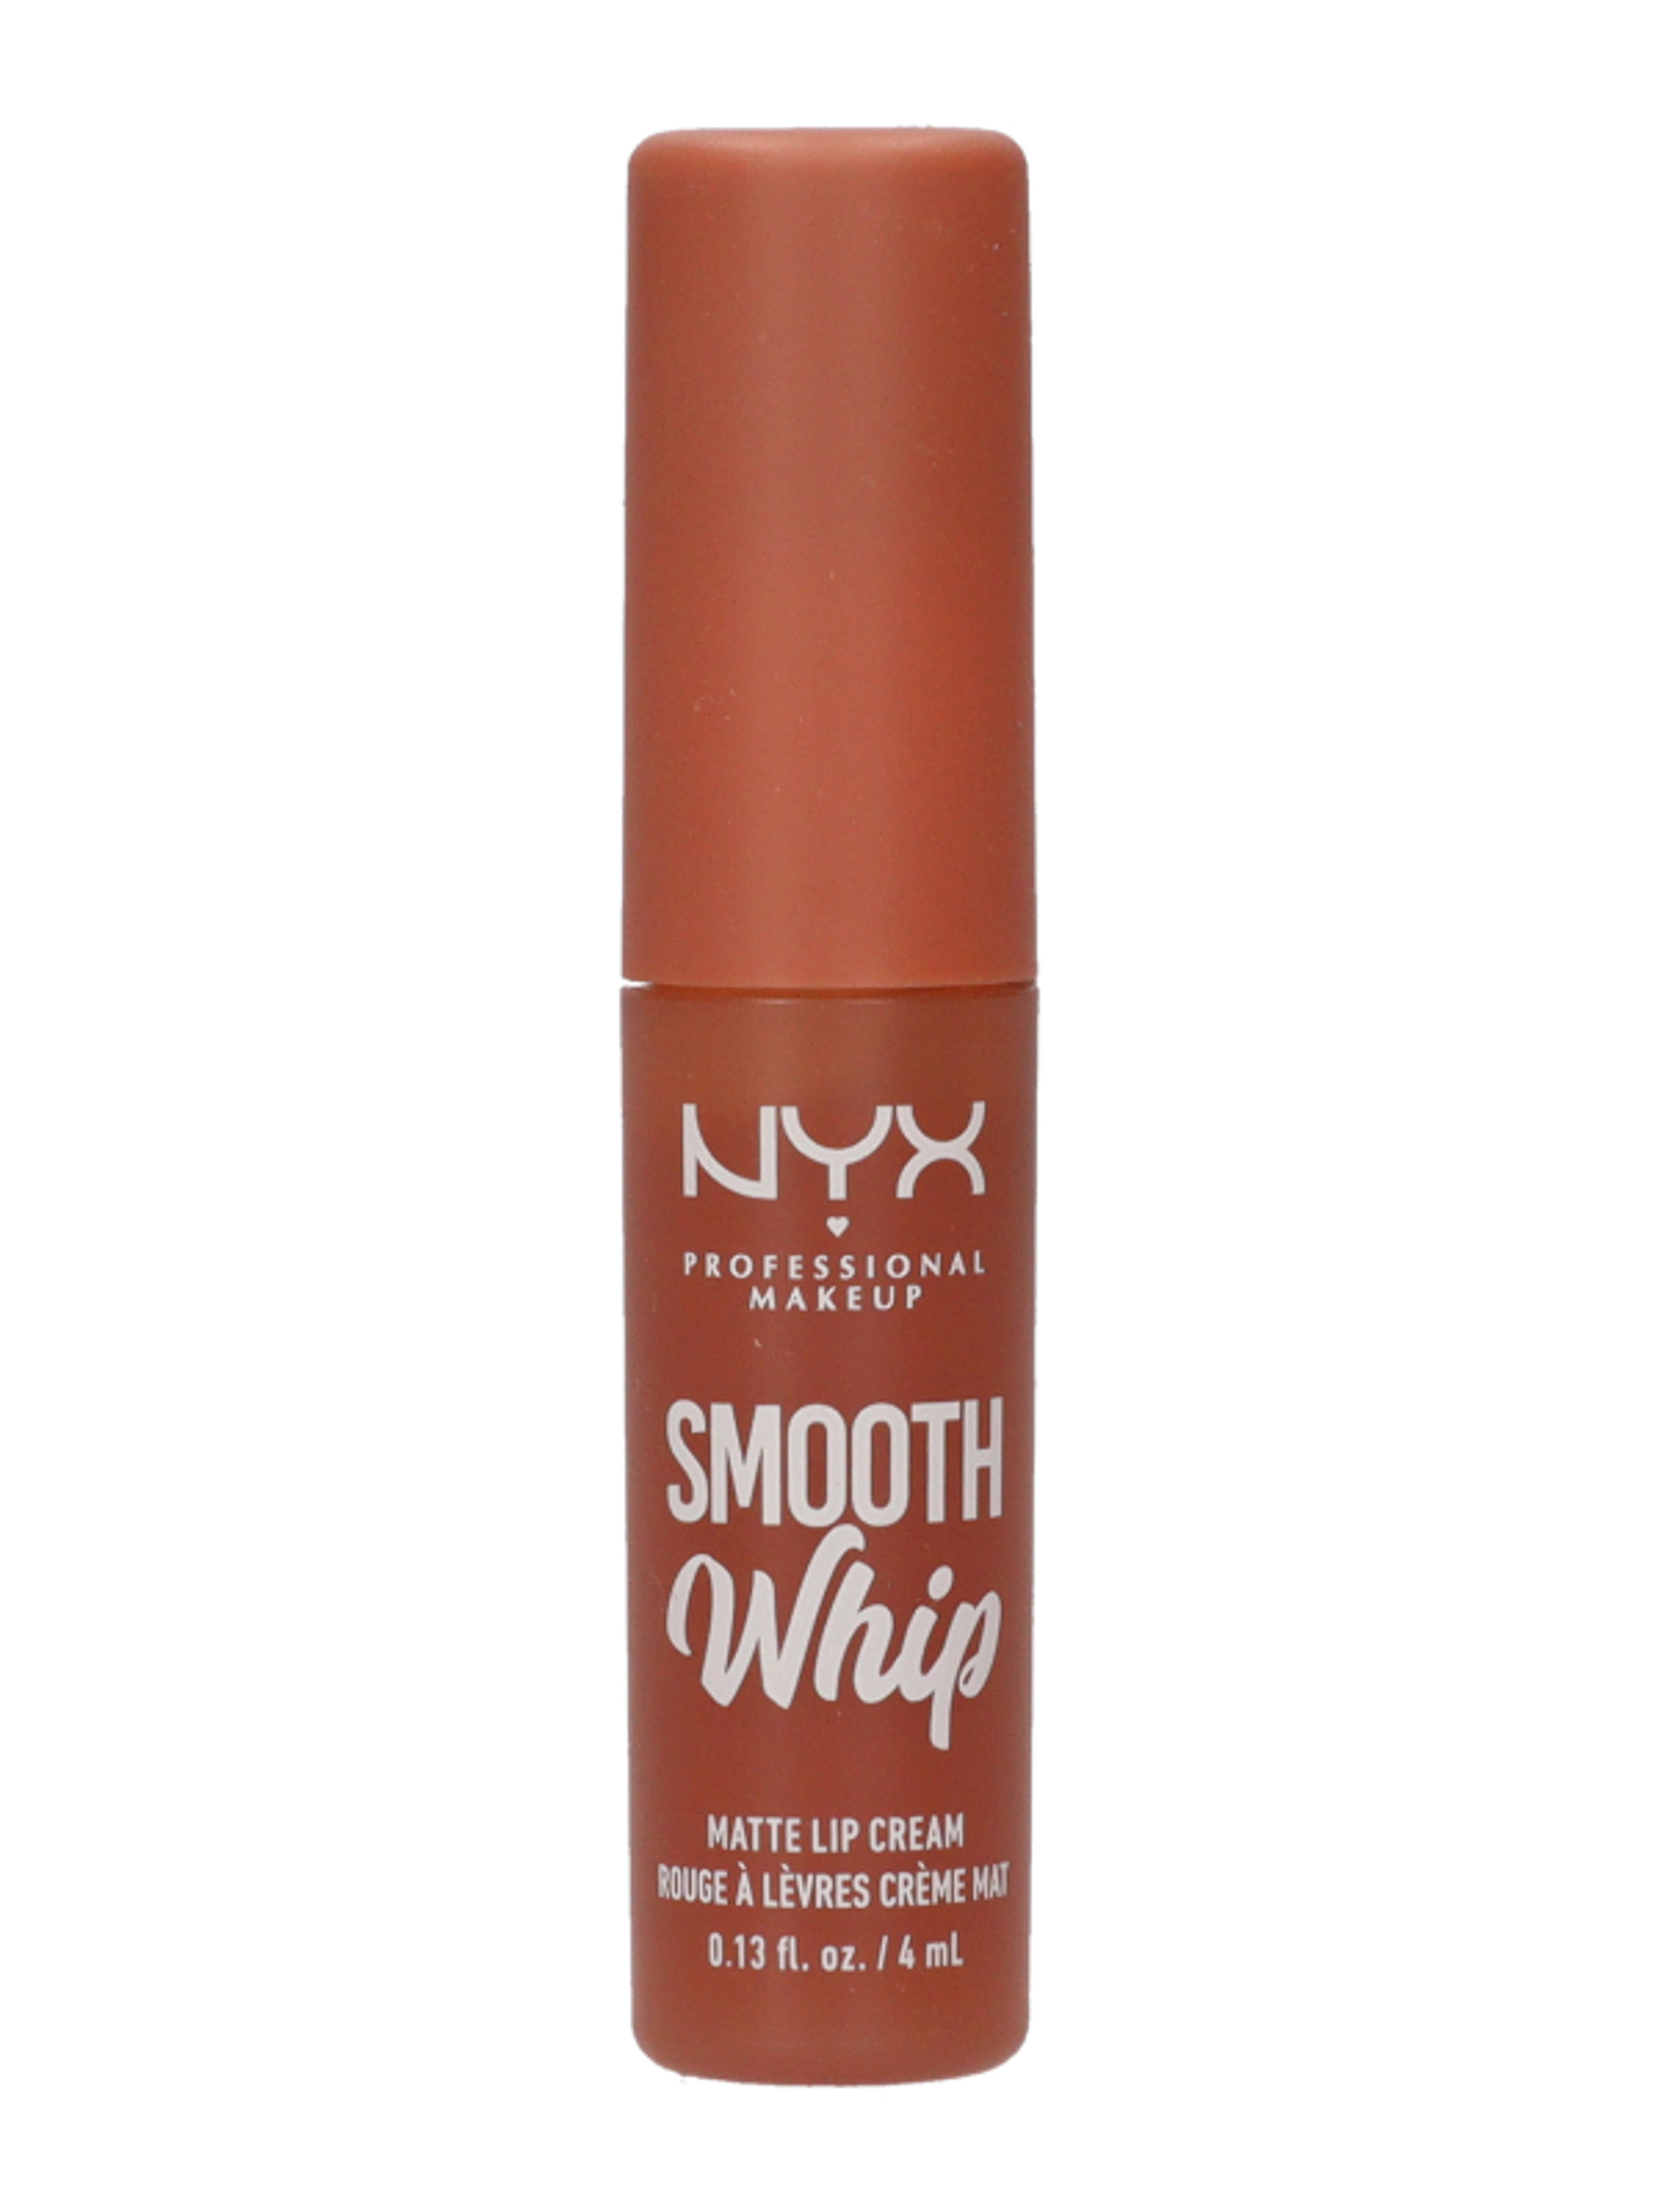 NYX Professional Makeup Smooth Whip Matte Lip Cream folyékony matt rúzs /Laundry Day - 1 db-1